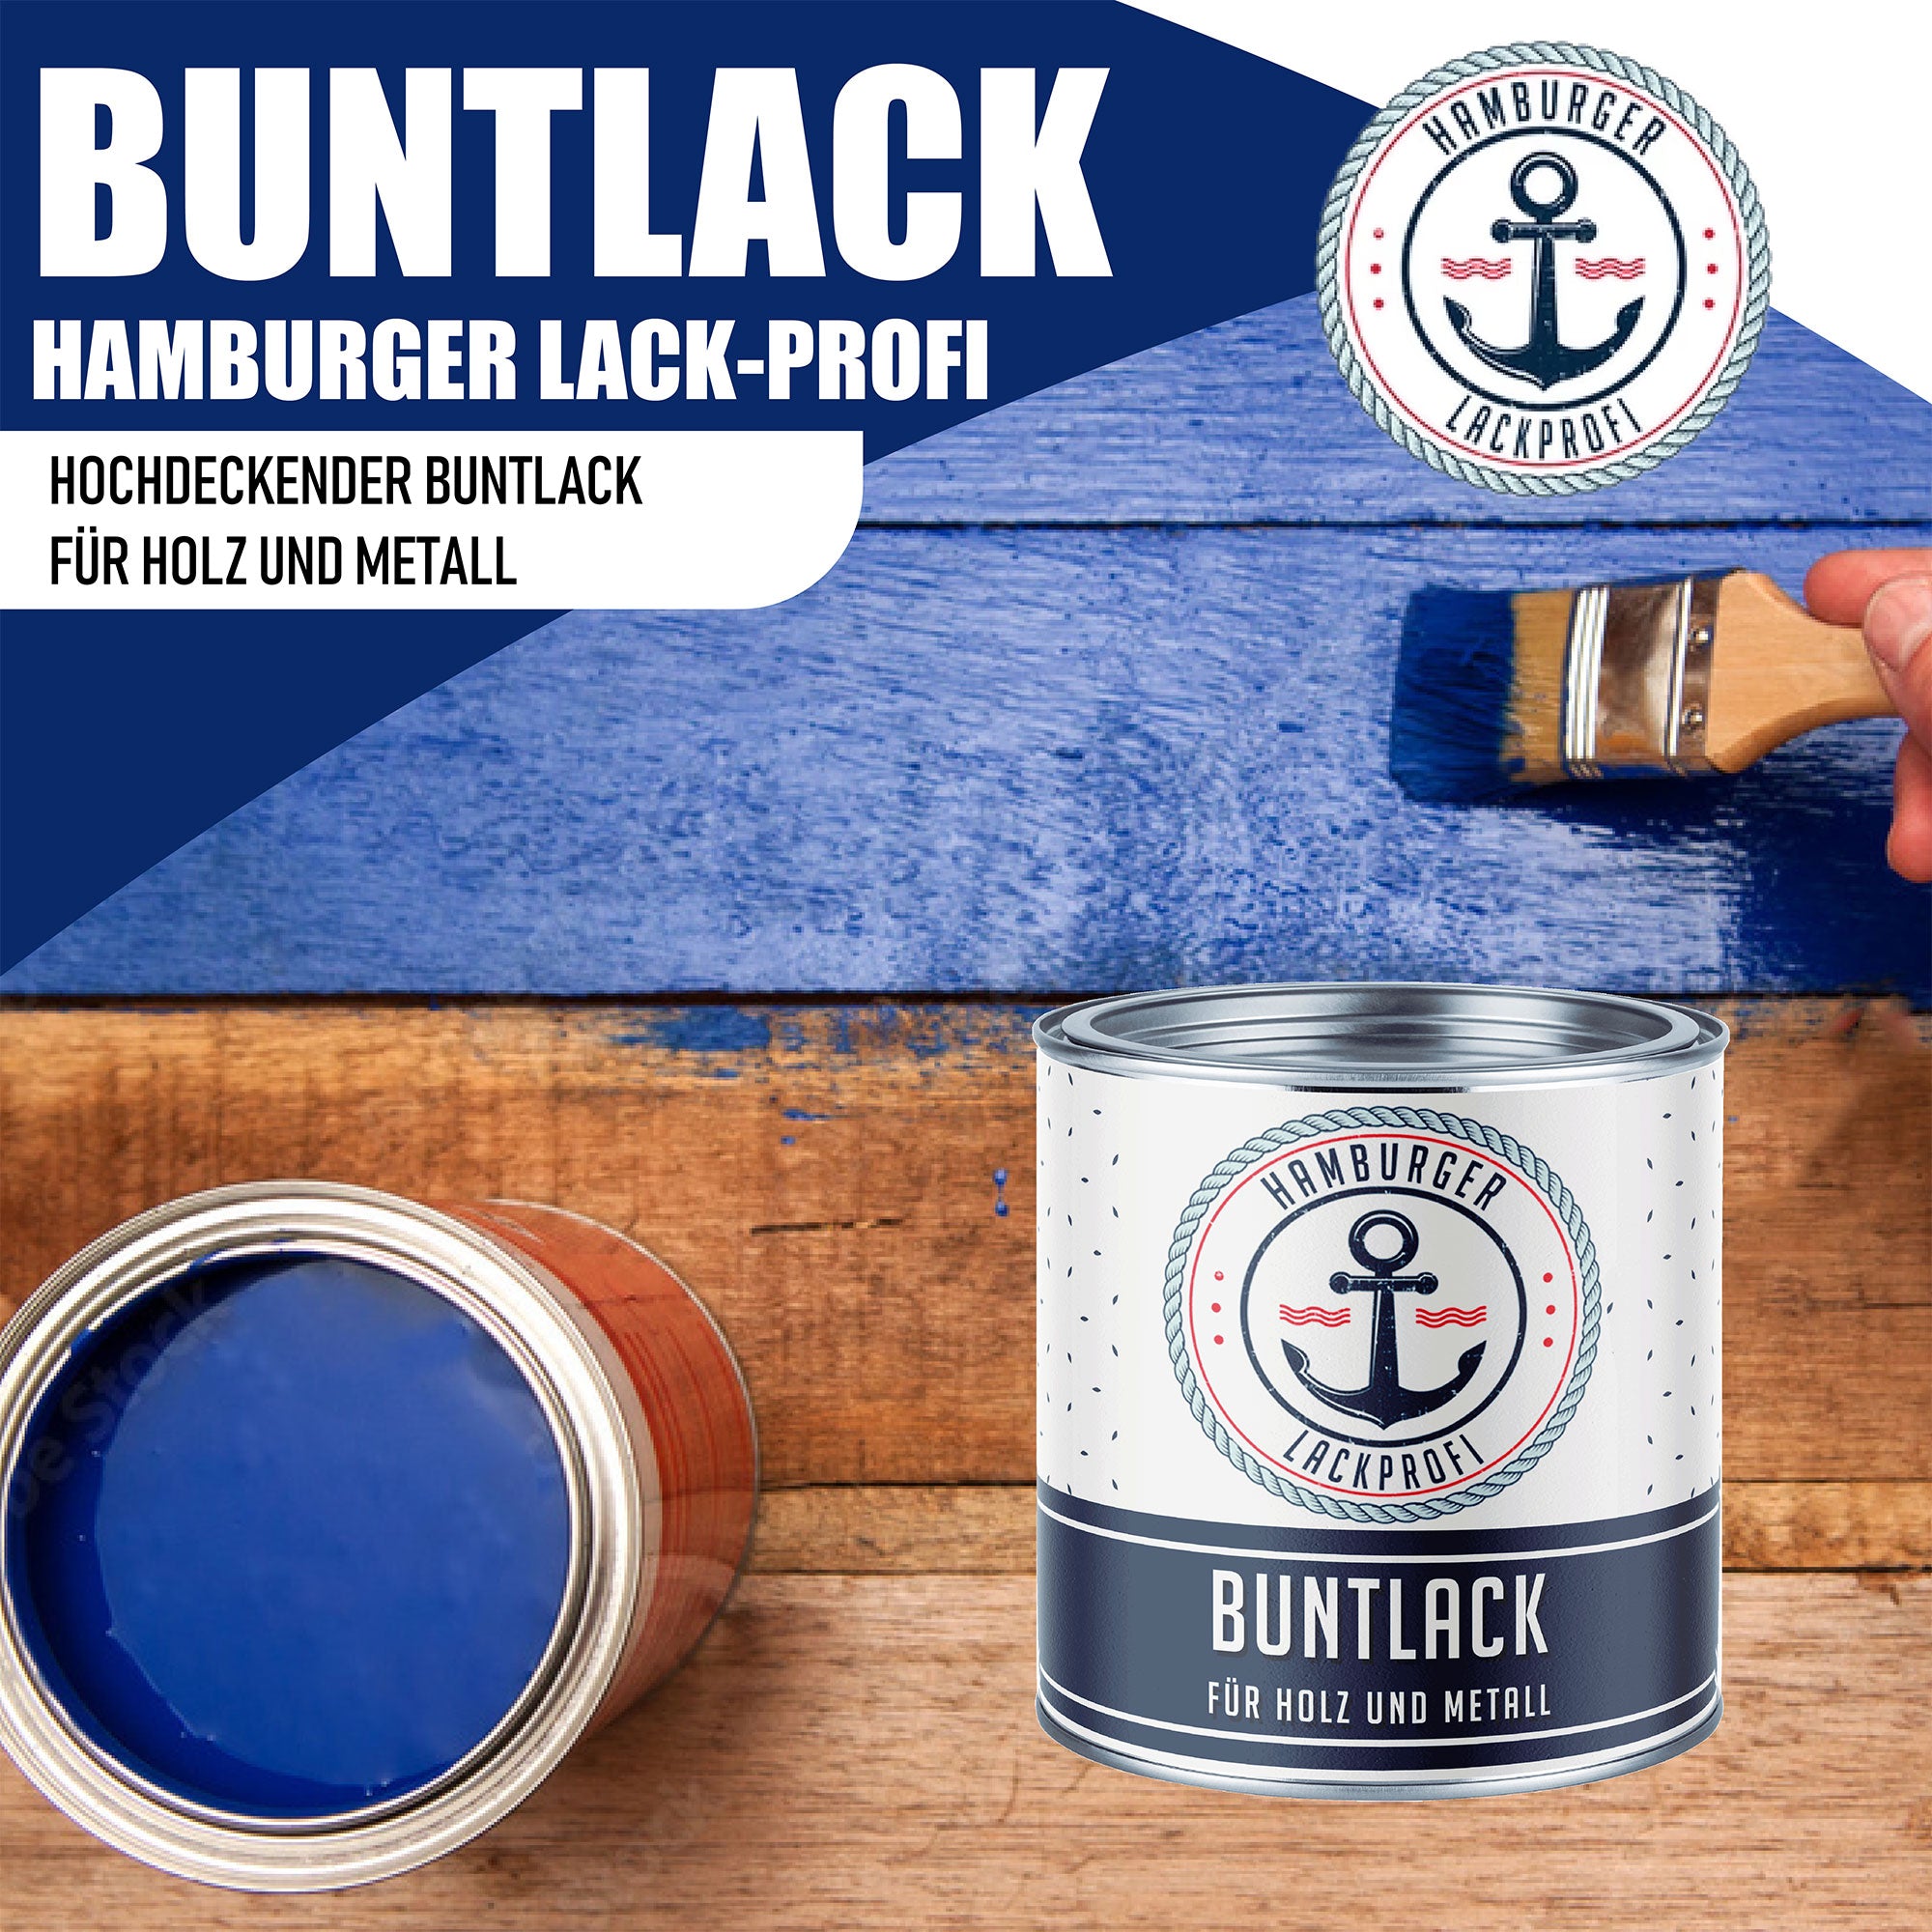 Hamburger Lack-Profi Buntlack Smaragdgrün RAL 6001 - Robuster Kunstharzlack